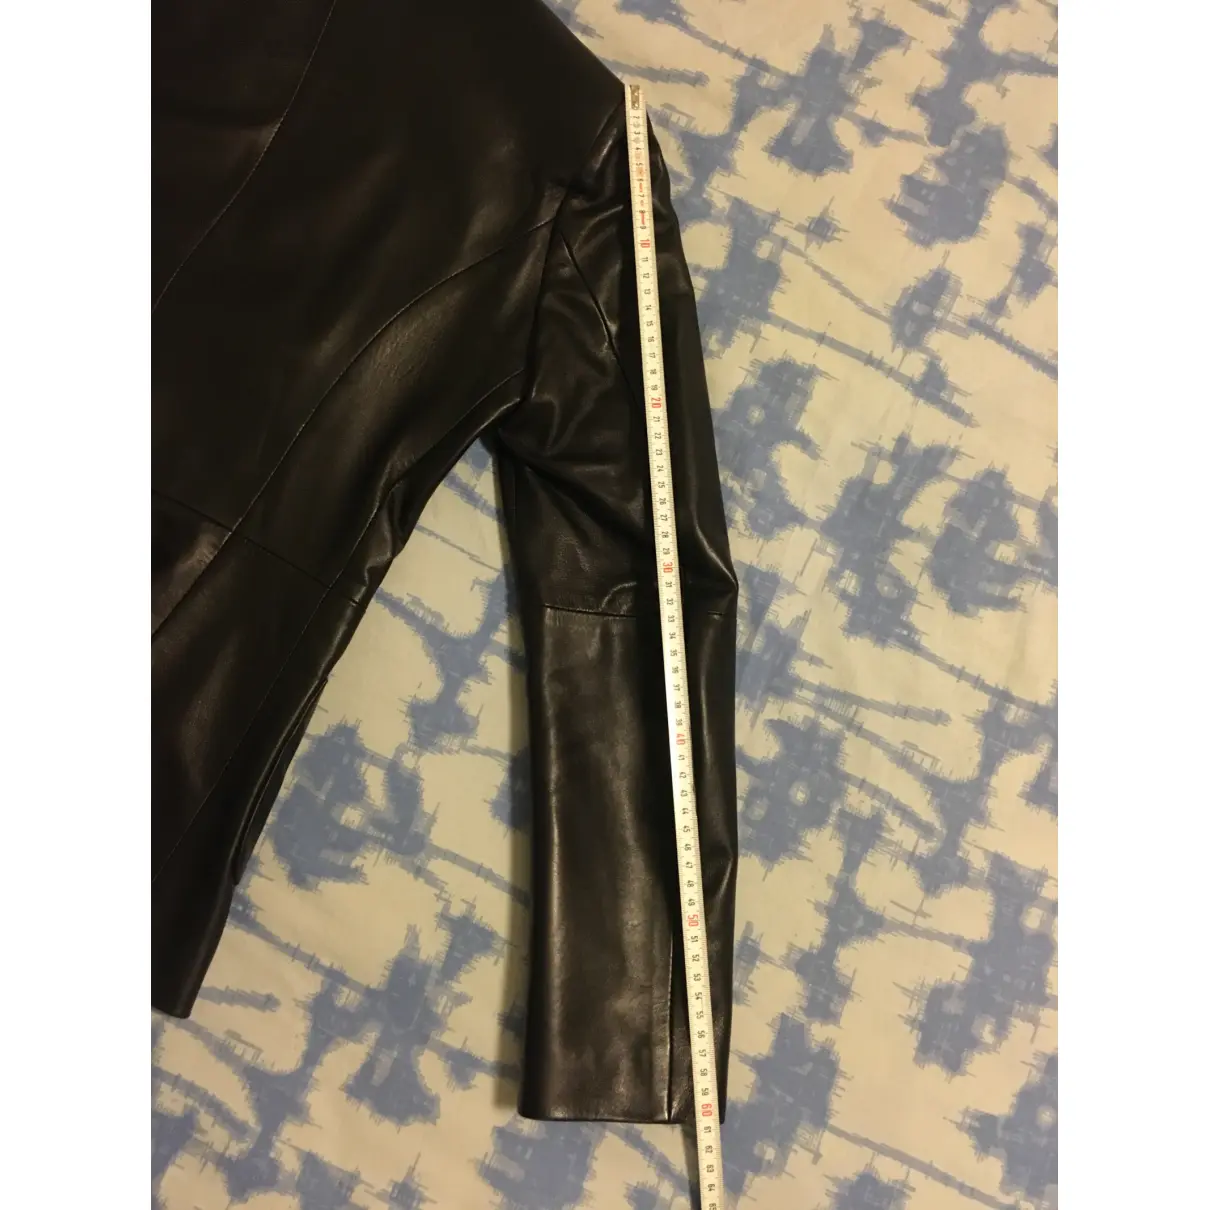 Leather biker jacket Fratelli Rossetti